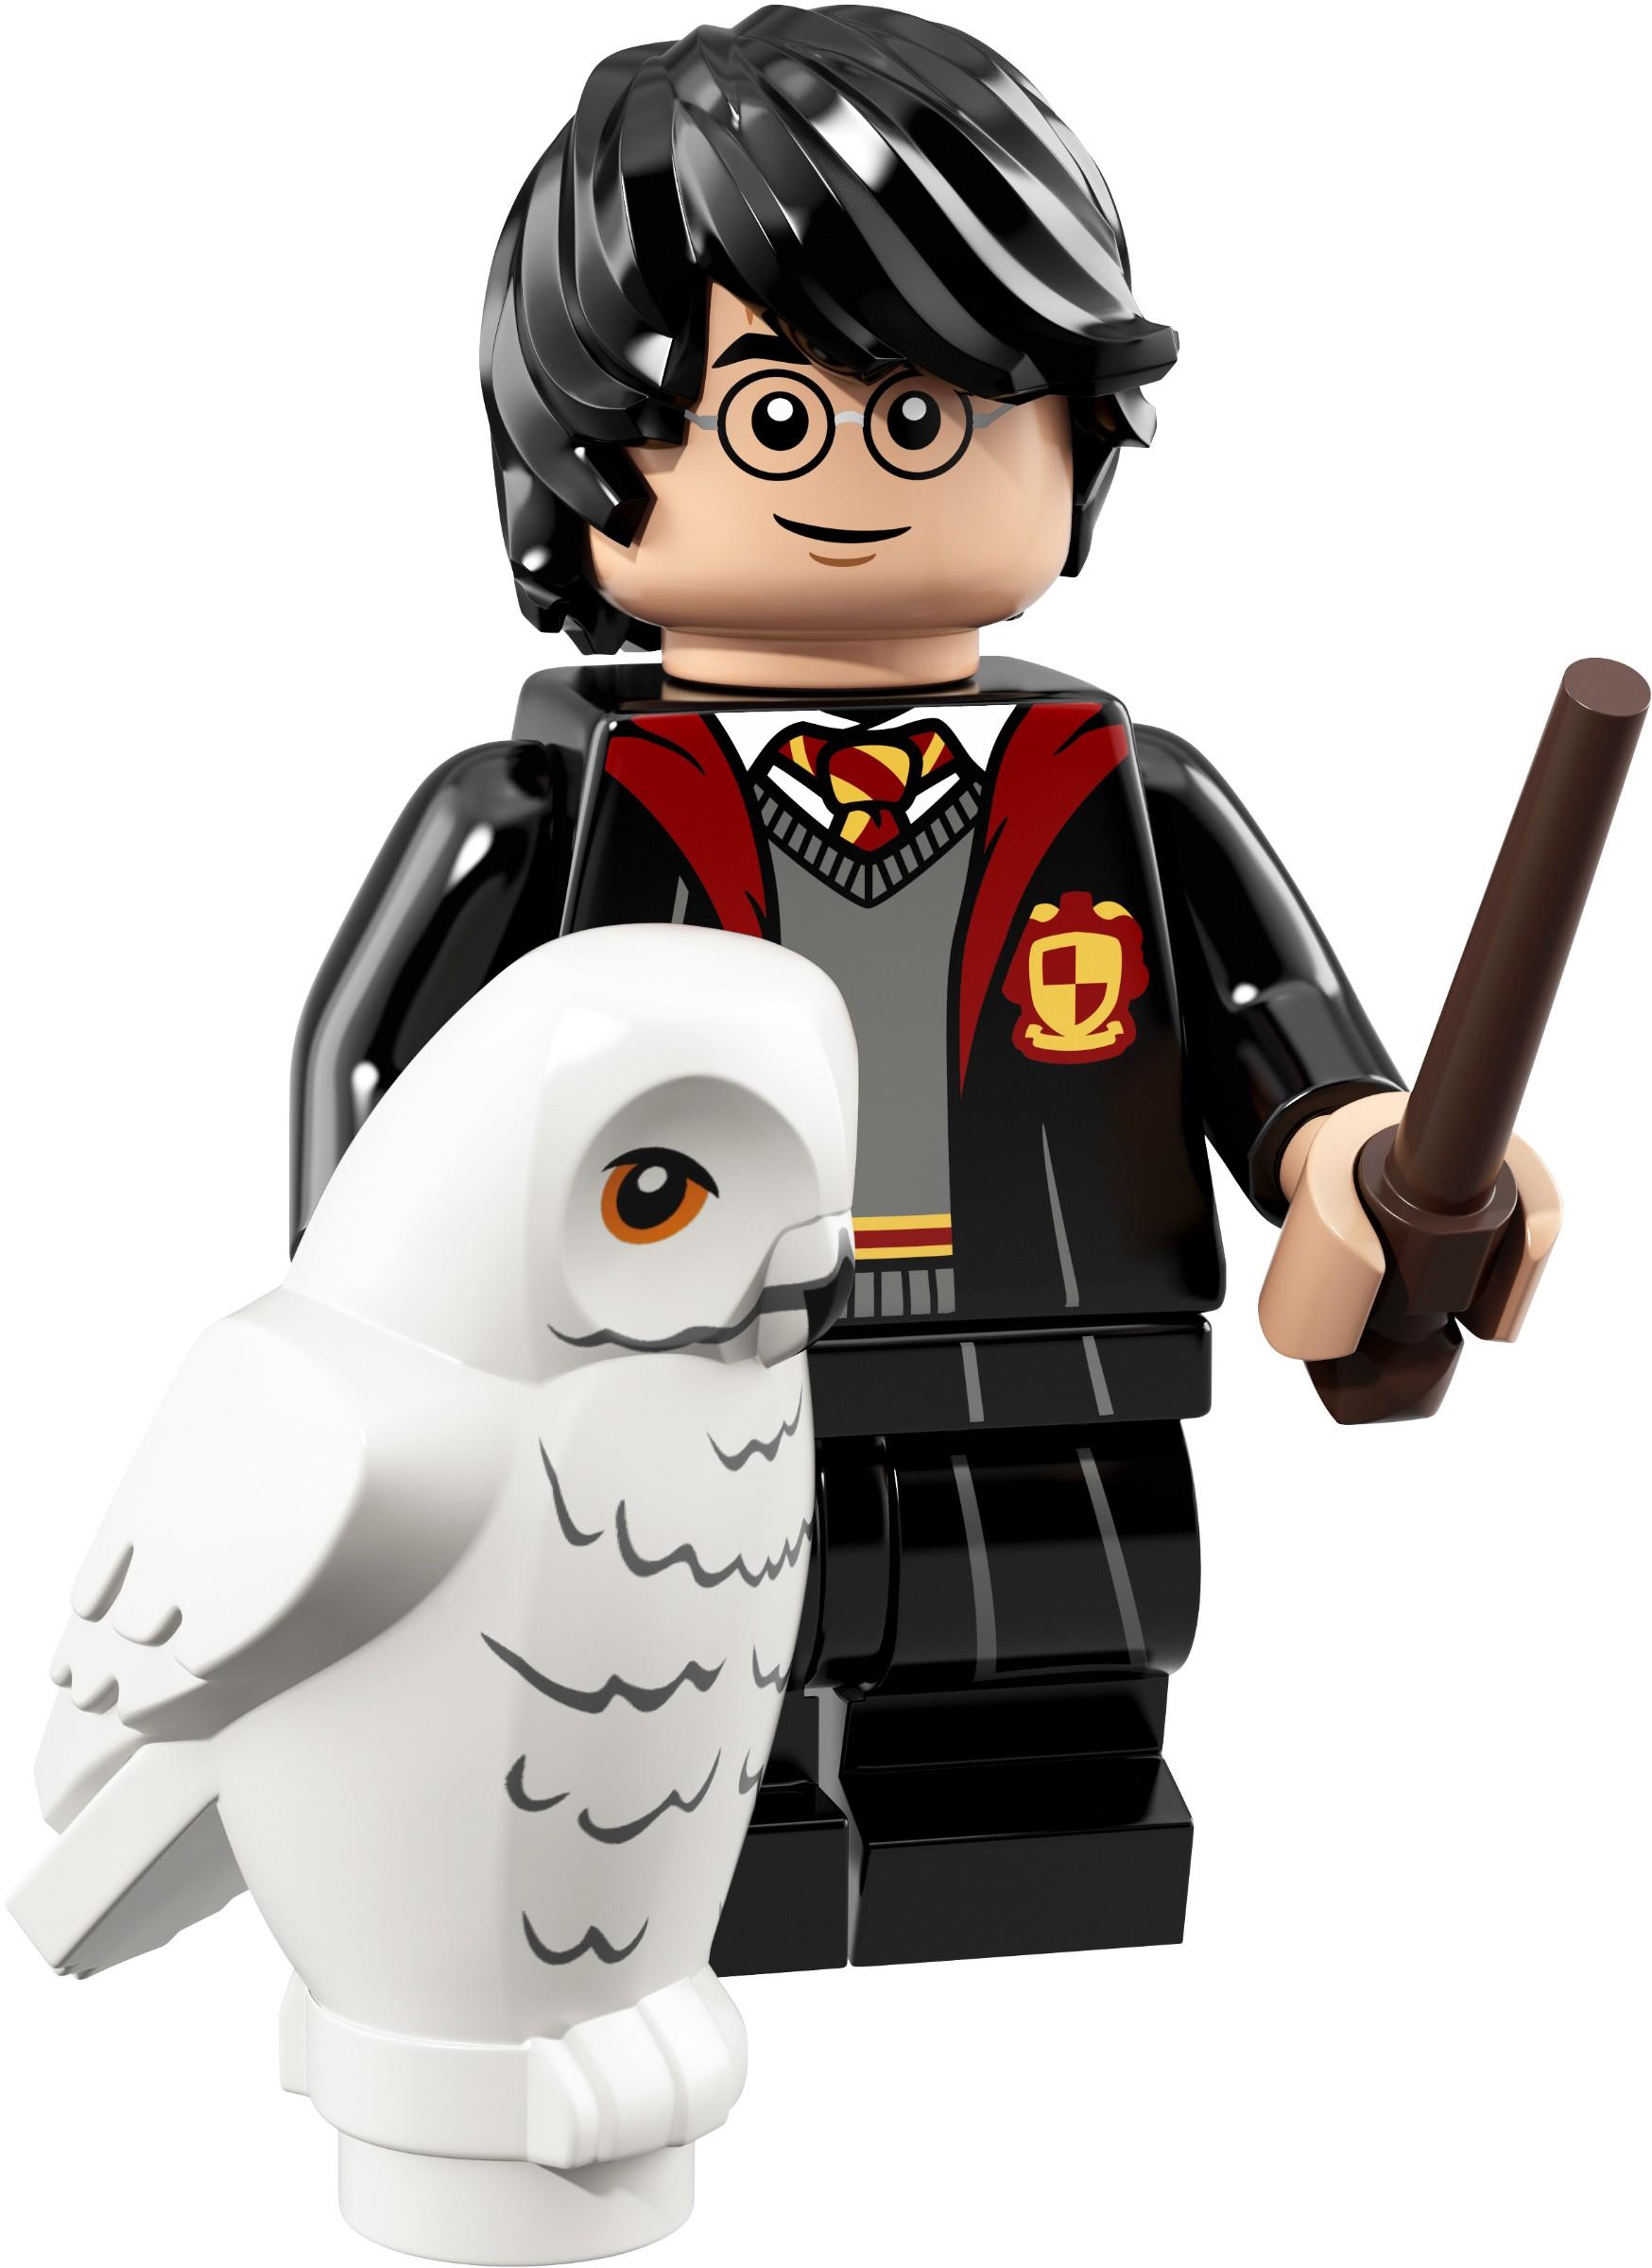 LEGO Harry Potter Series 1 71022 Mad-Eye Moody Minifigure #14 